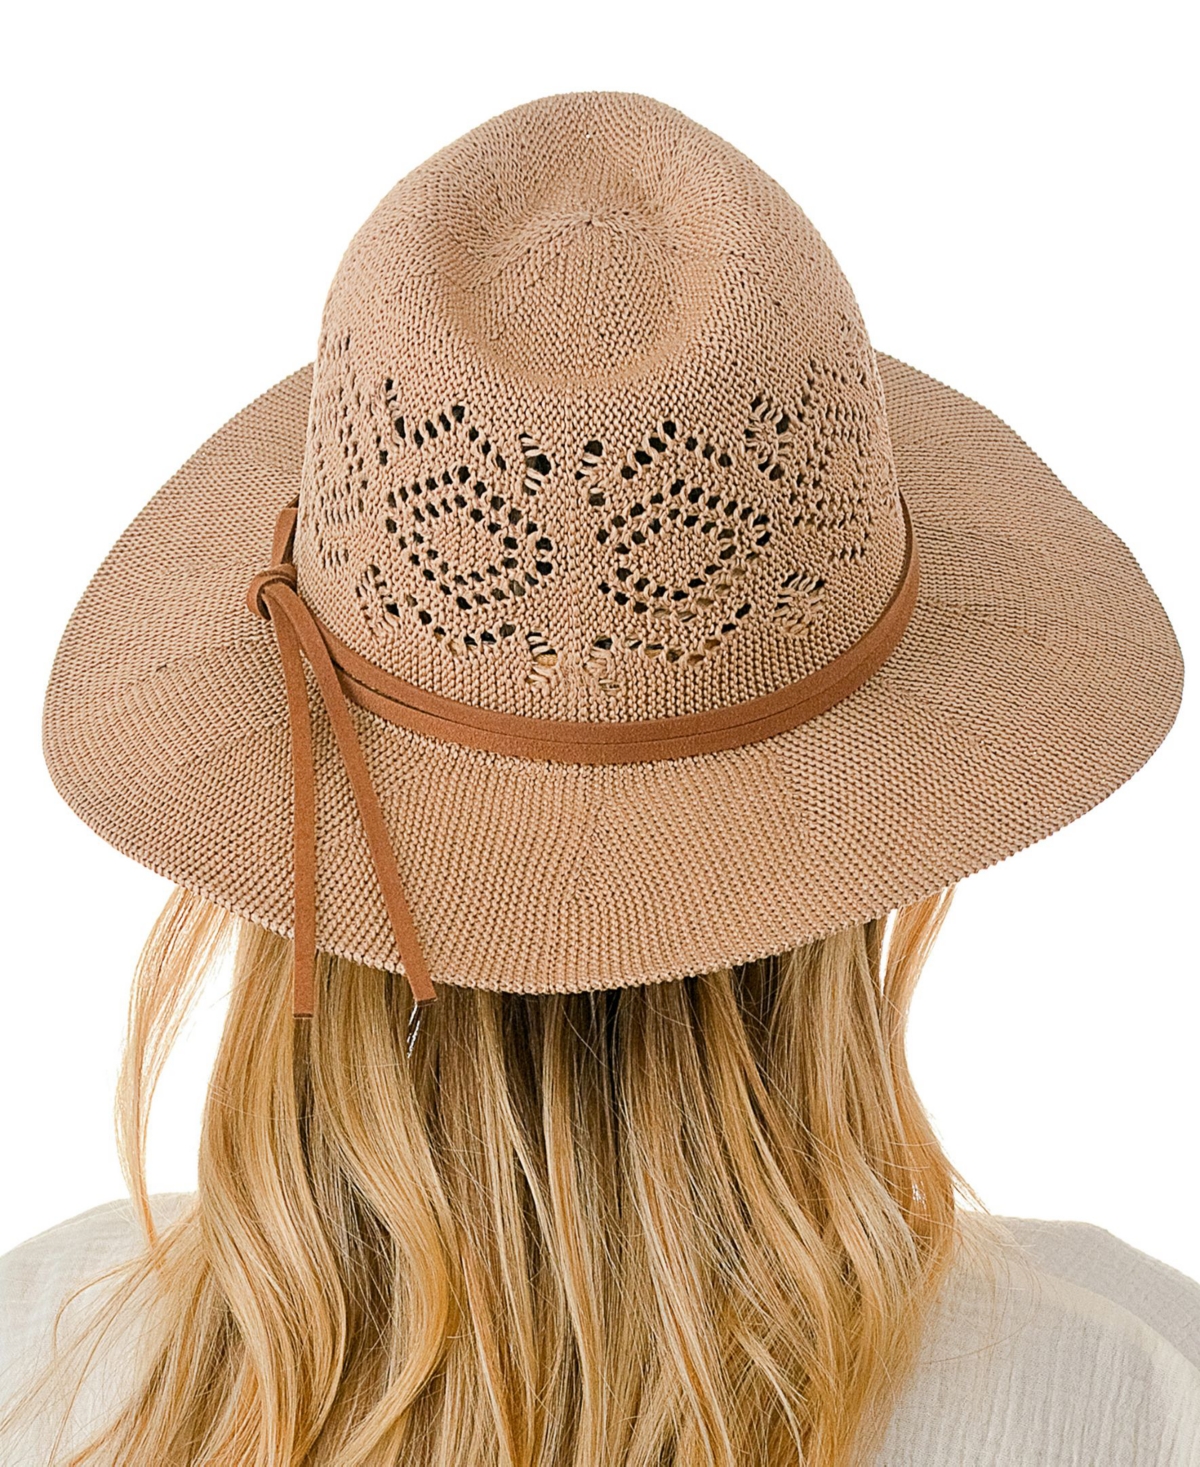 Shop Marcus Adler Women's Packabable Panama Hat With Suede Trim In Dark Tan